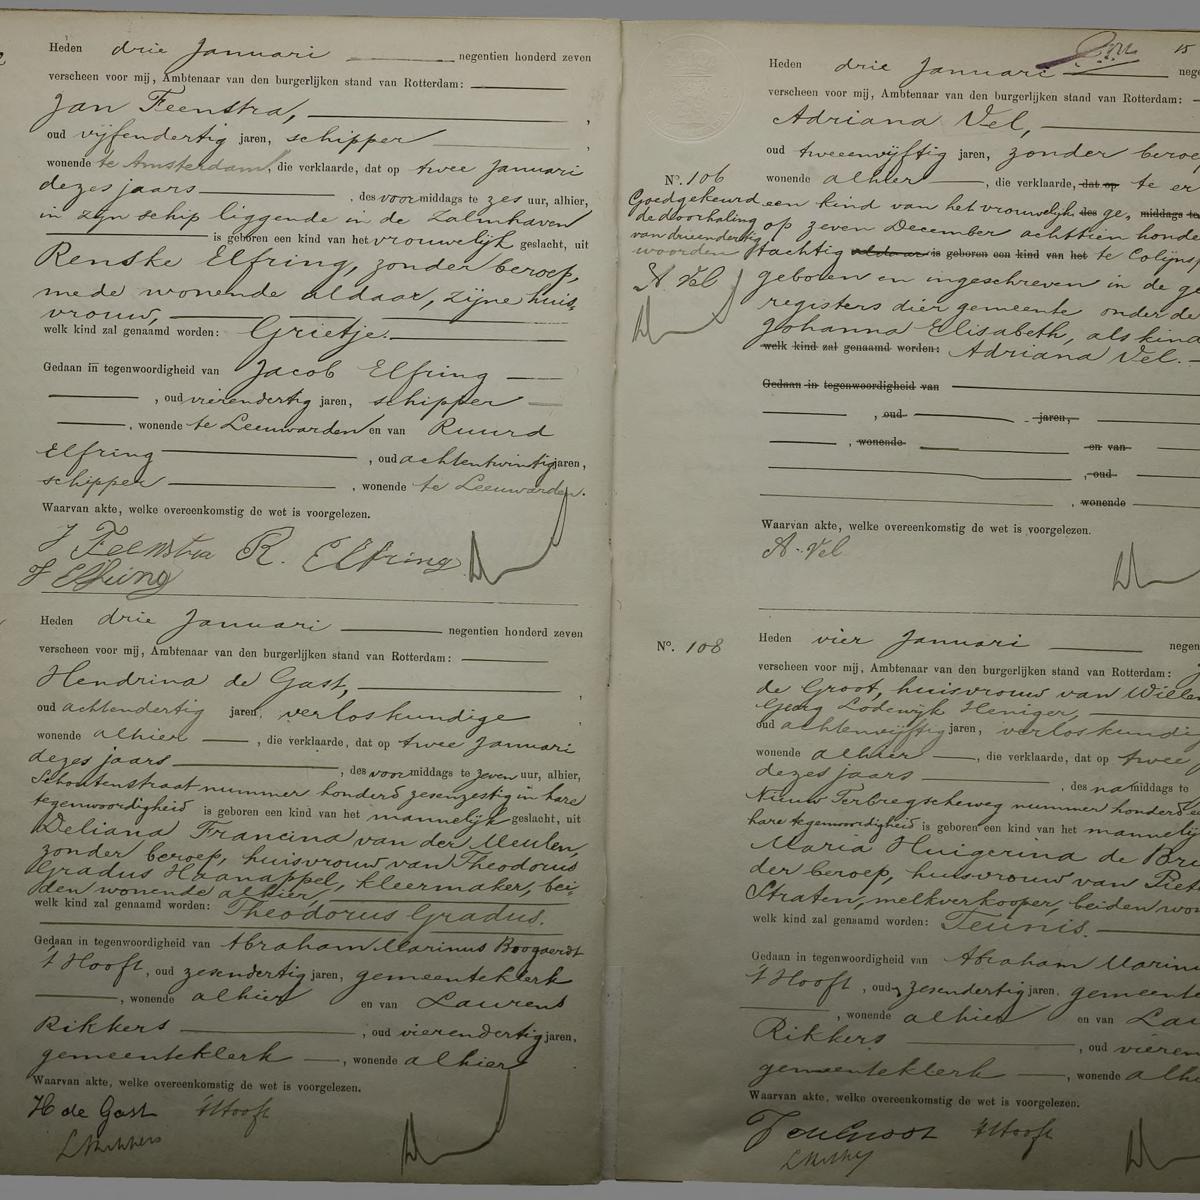 Civil registry of births, Rechtbank Rotterdam, 1907, records 102-108 (even)